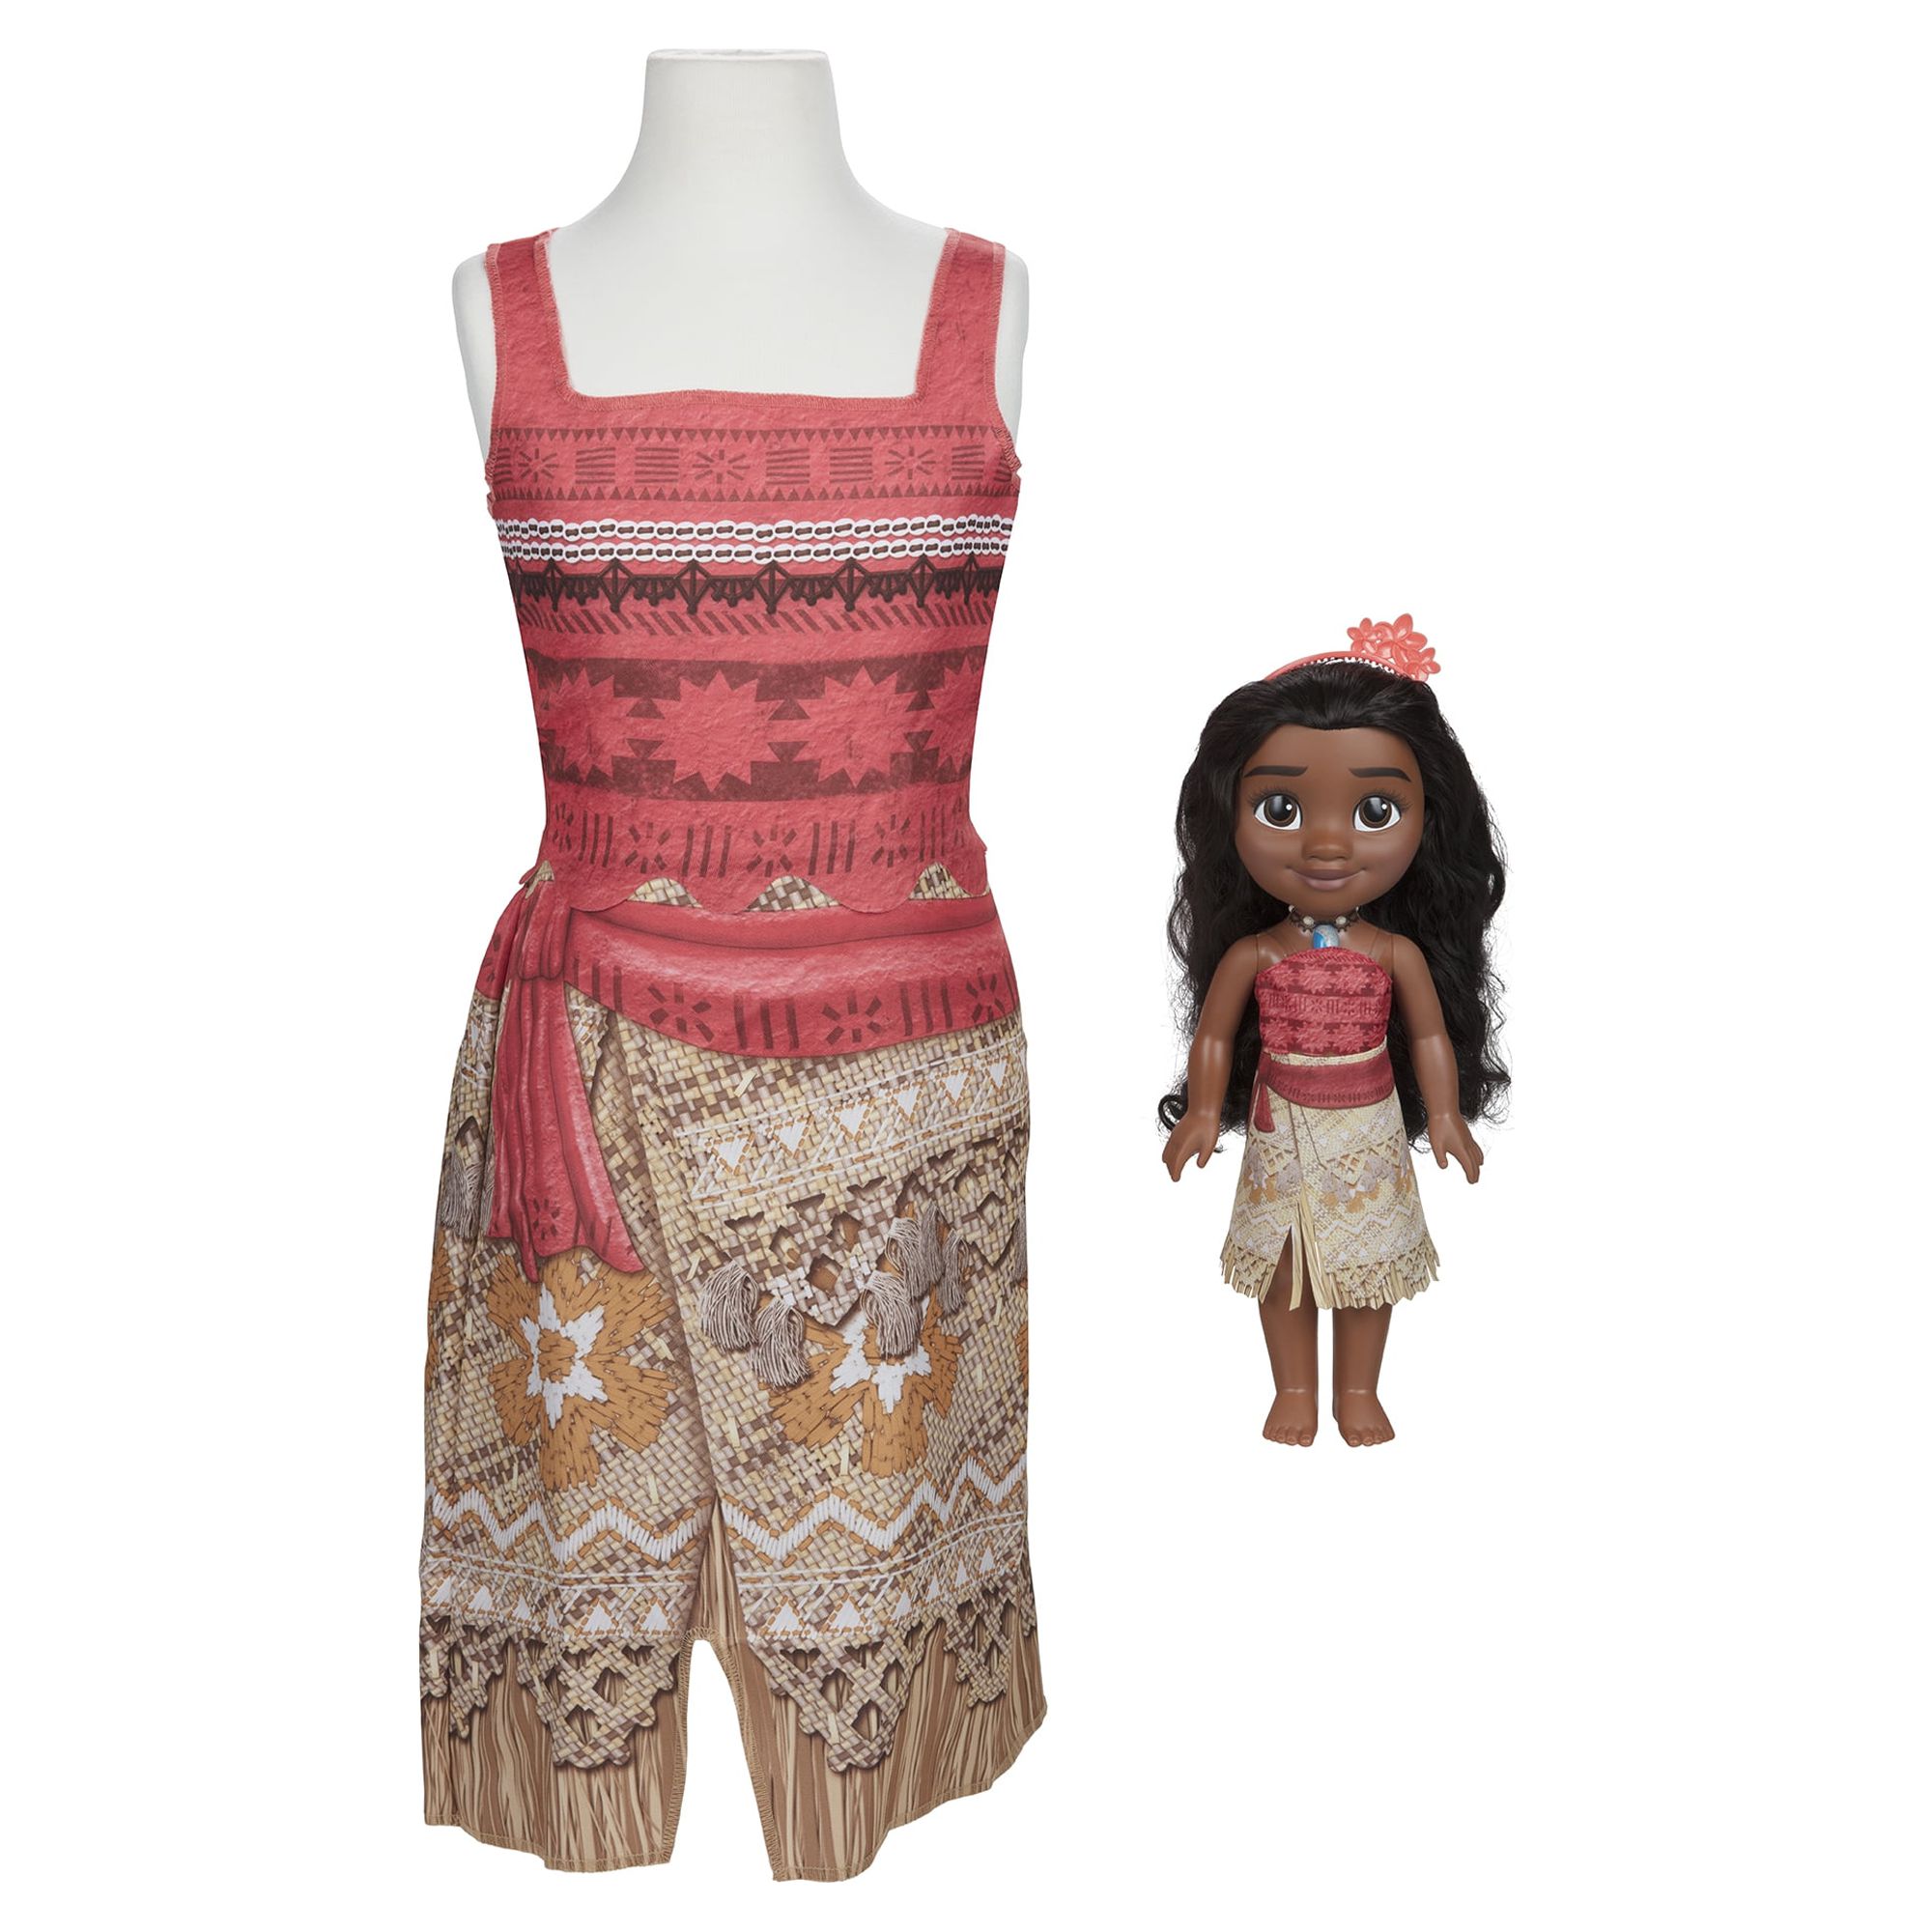 Disney Princess My Friend Moana Doll with Child Size Dress Gift Set - image 1 of 10